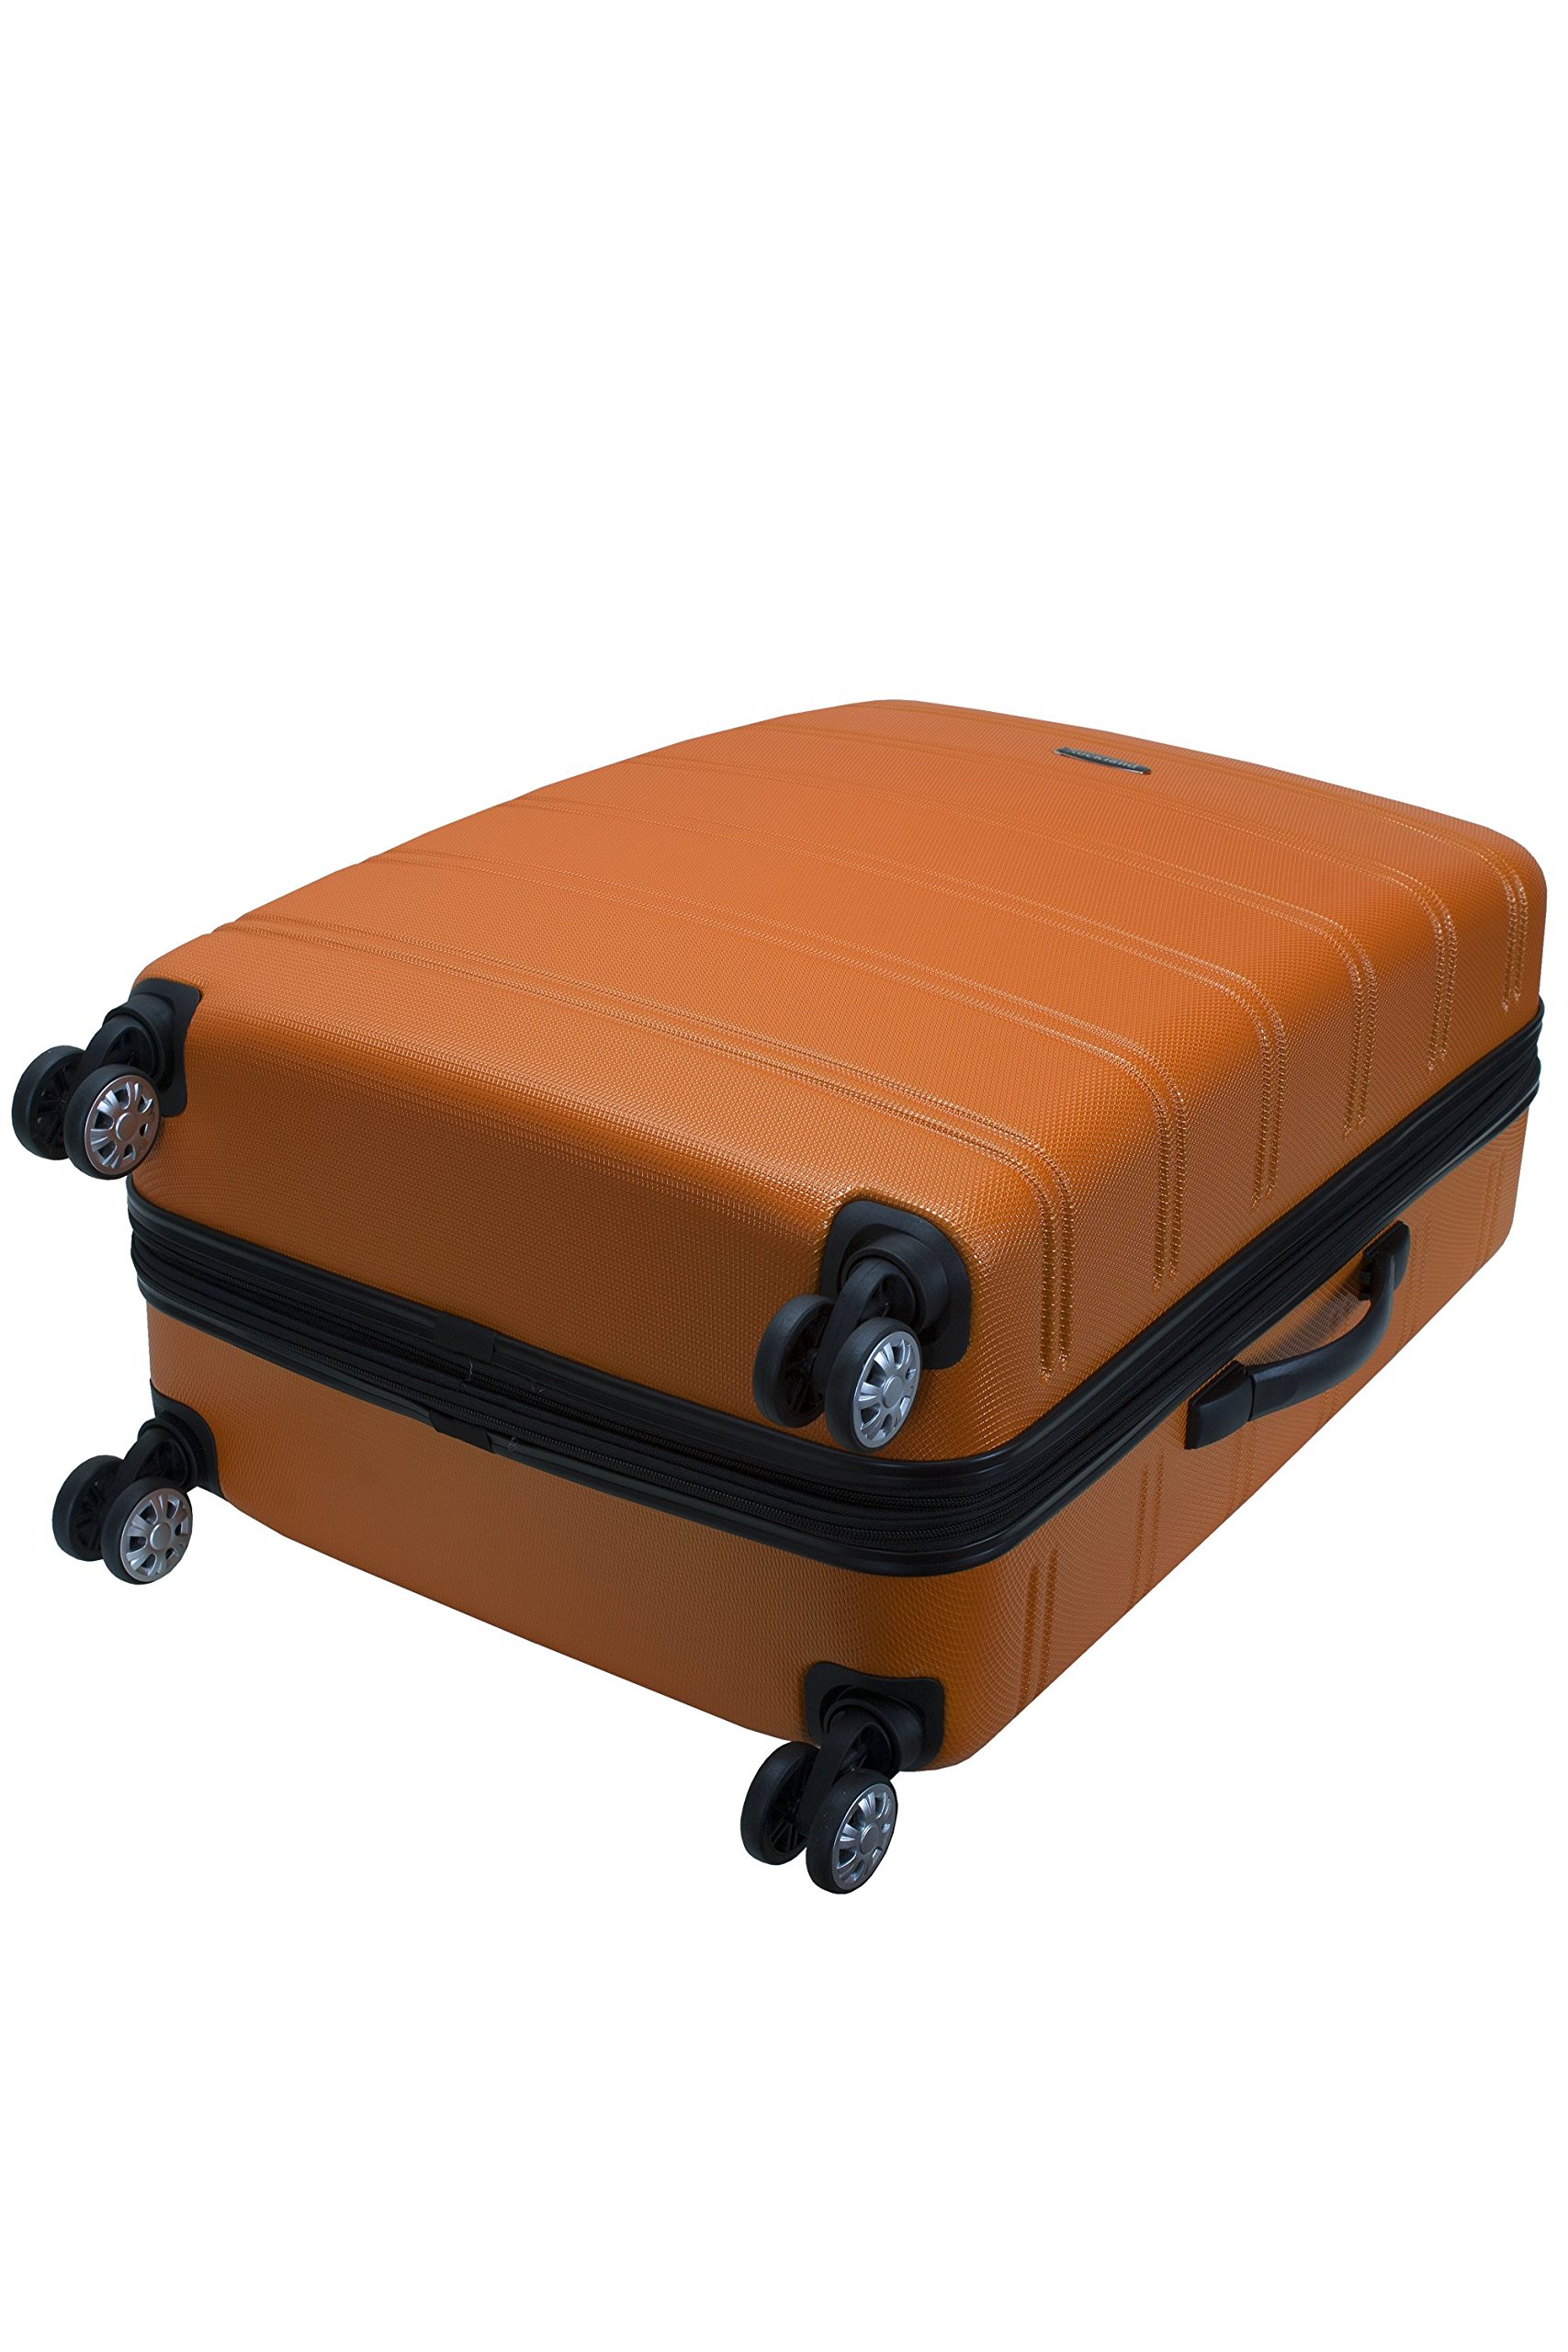 Rockland Melbourne Hardside Expandable Spinner Wheel Luggage, Orange, Checked-Large 28-Inch